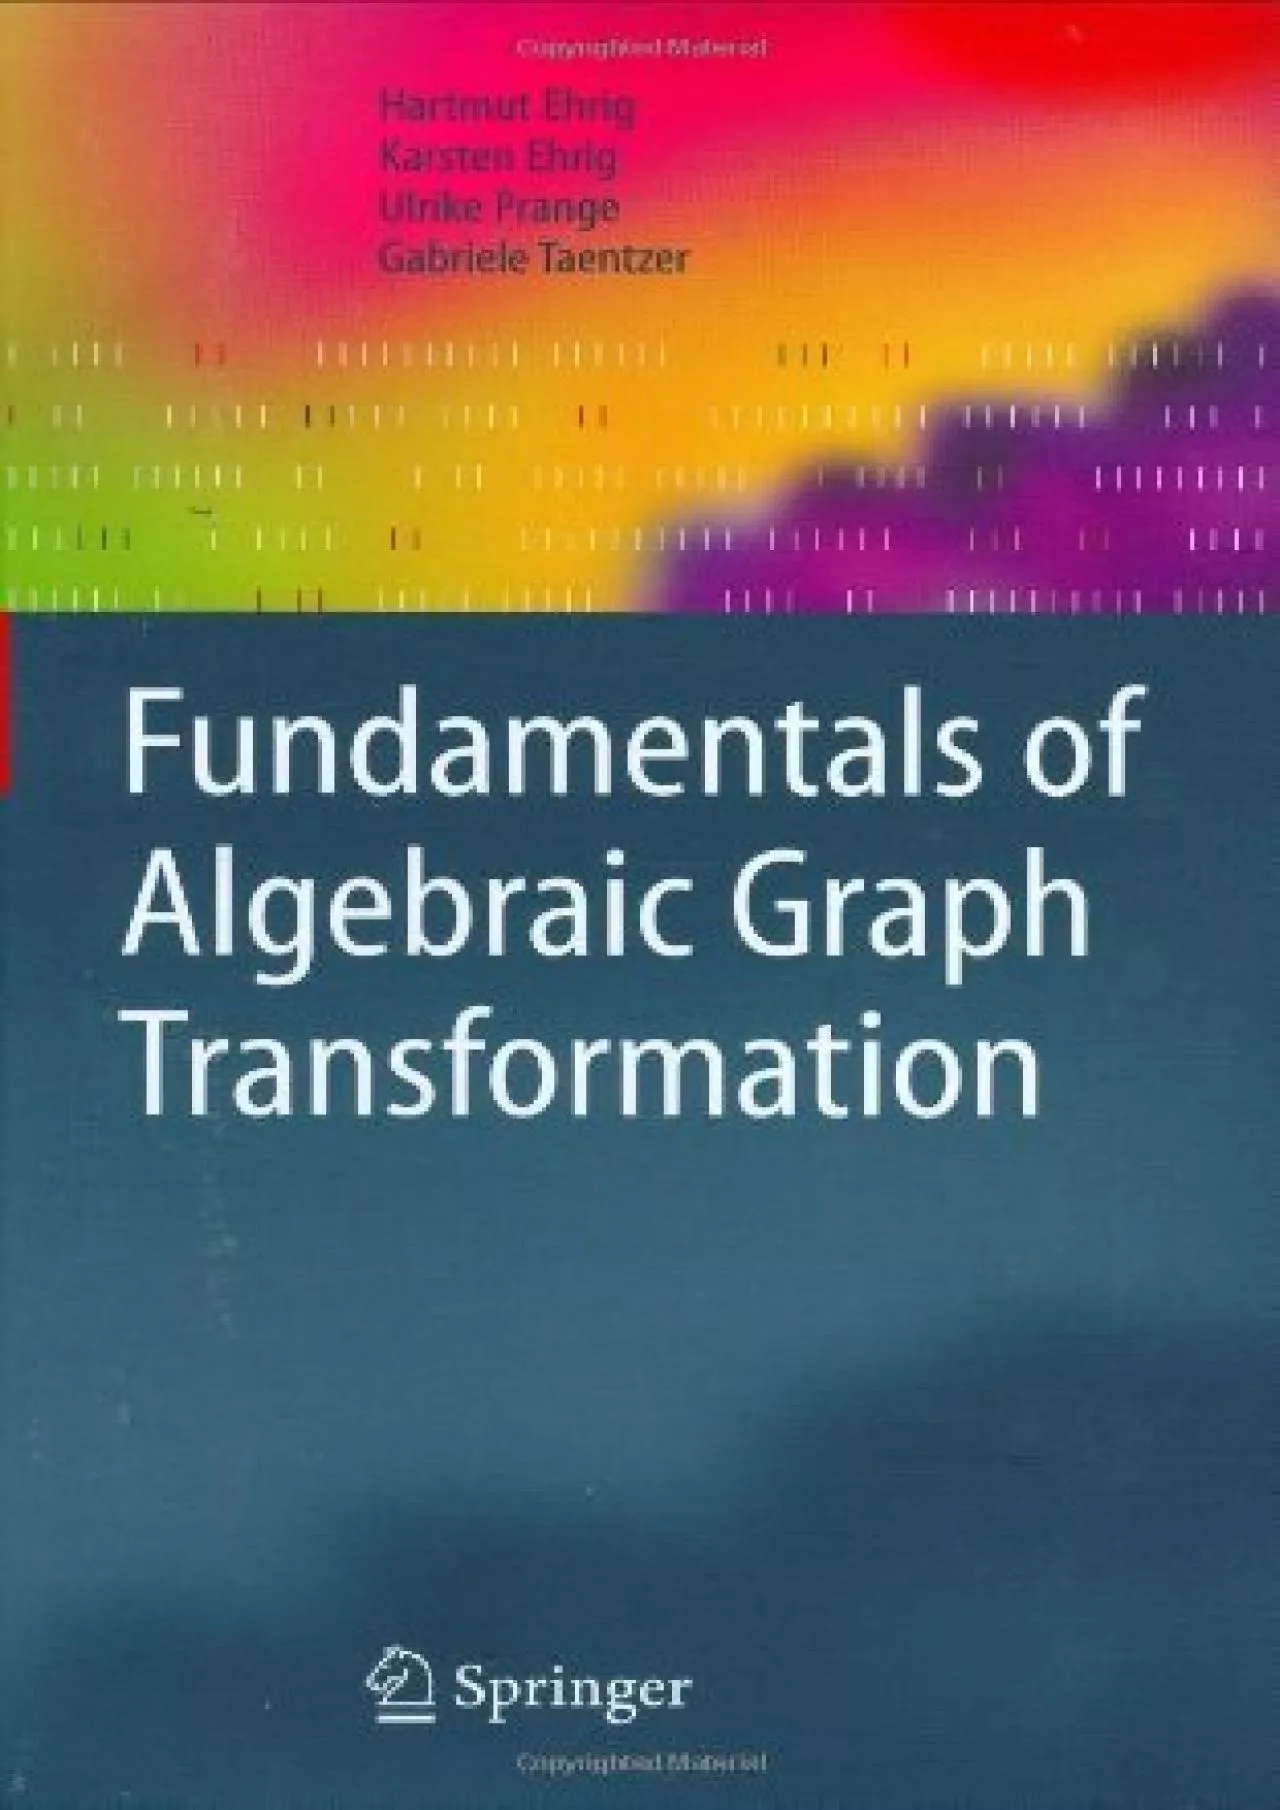 [READING BOOK]-Fundamentals of Algebraic Graph Transformation (Monographs in Theoretical